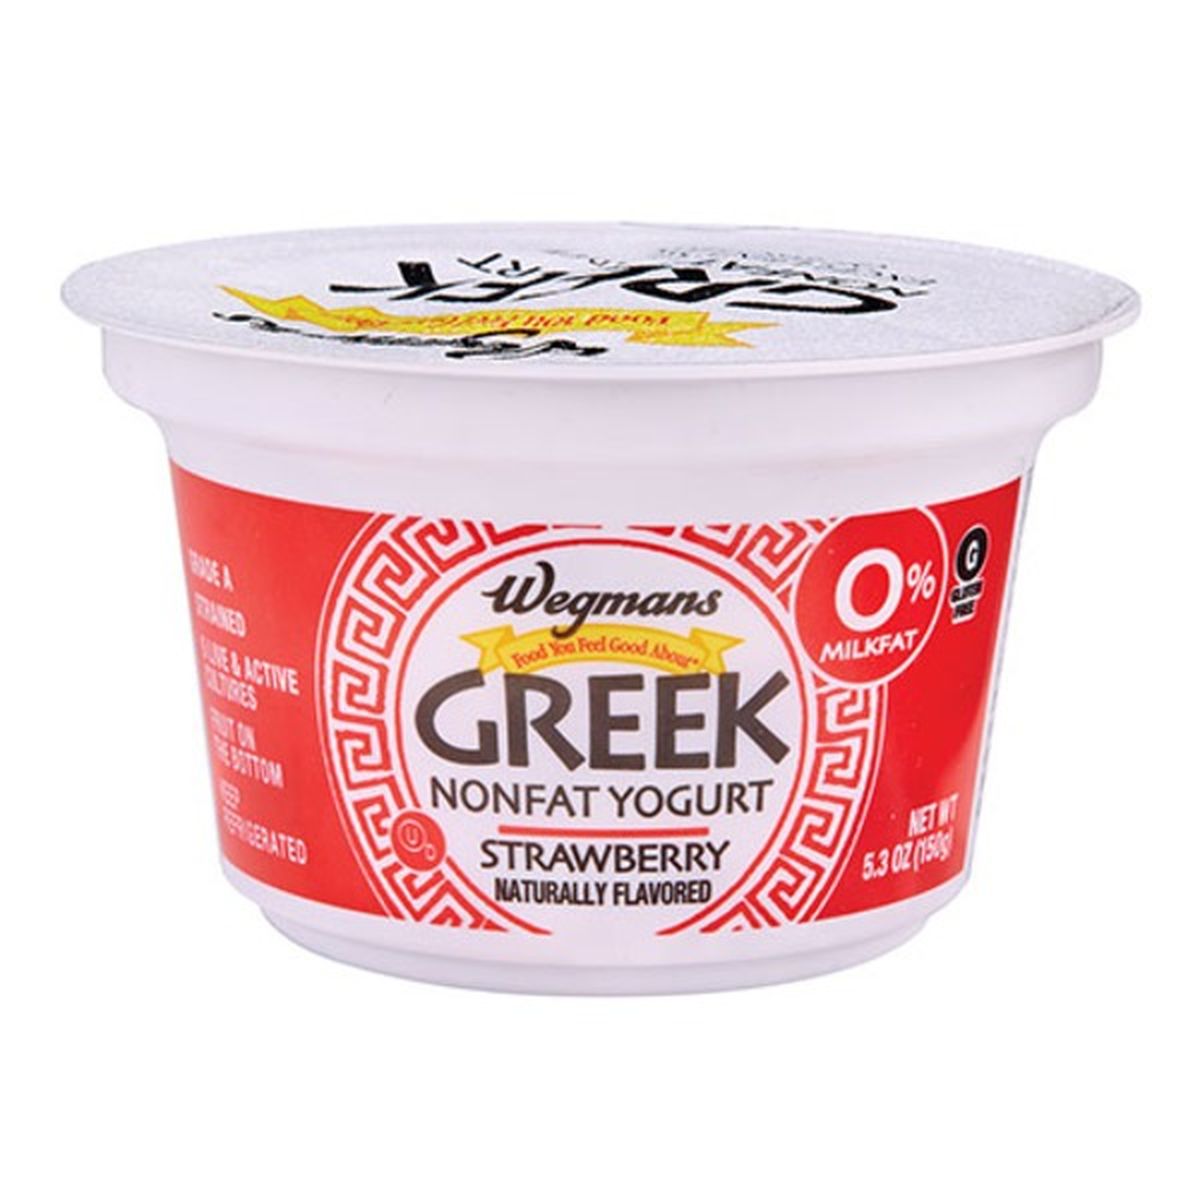 Calories in Wegmans Greek Strawberry Nonfat Yogurt